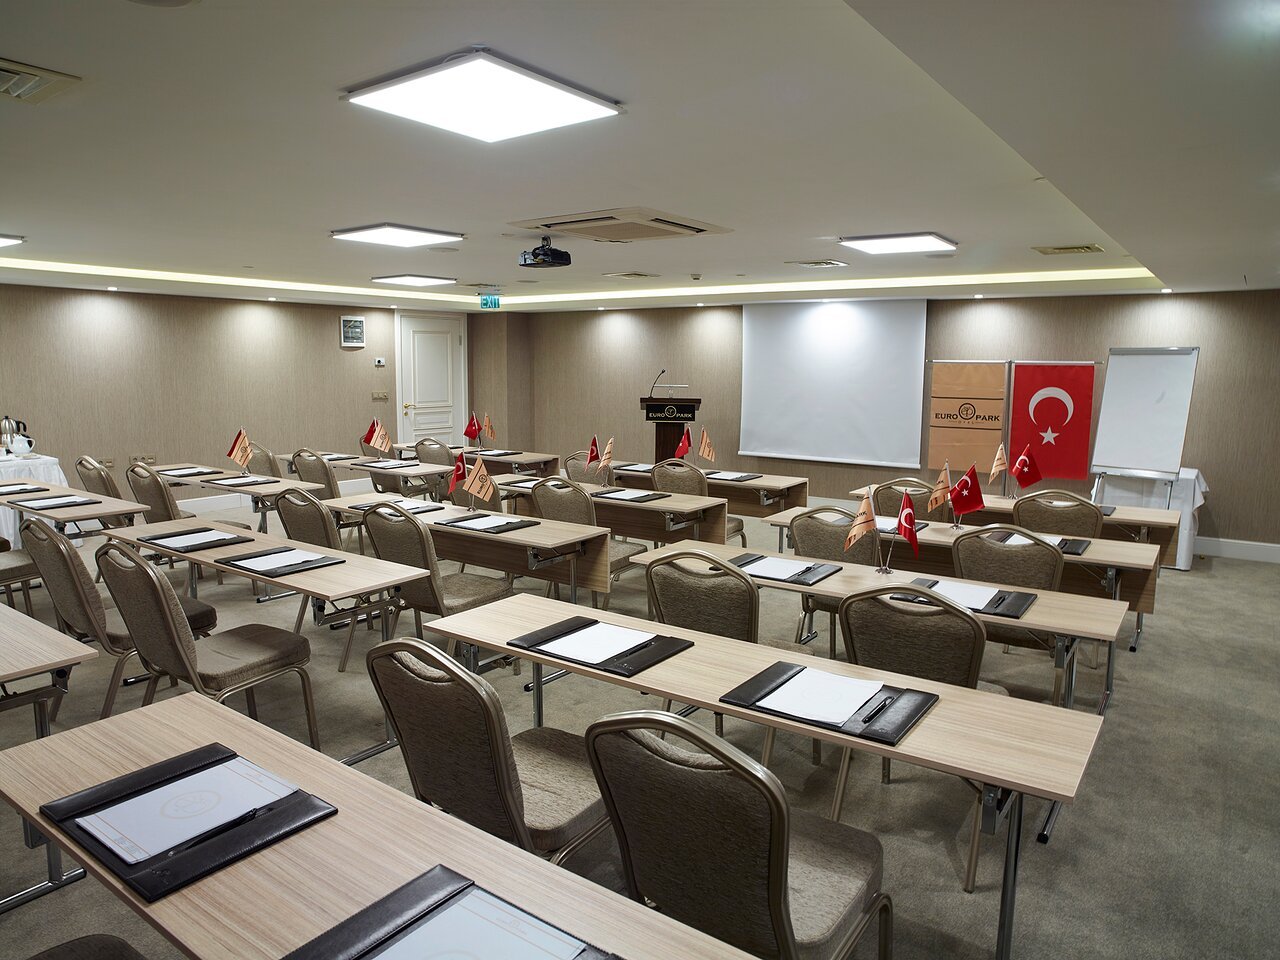 Türkiye closes all secondary schools for week, following earthquake